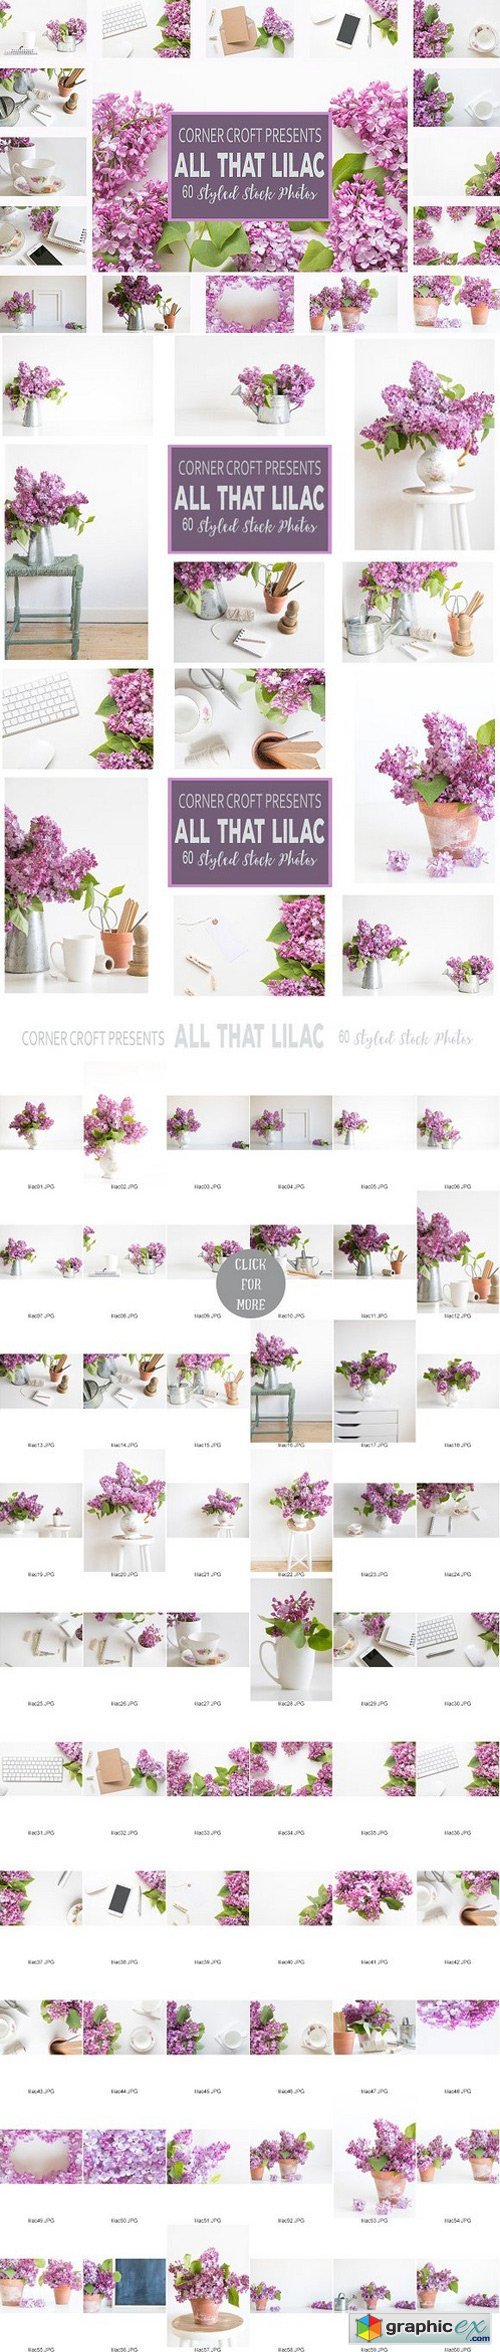 Lilac Styled Stock Photo Bundle